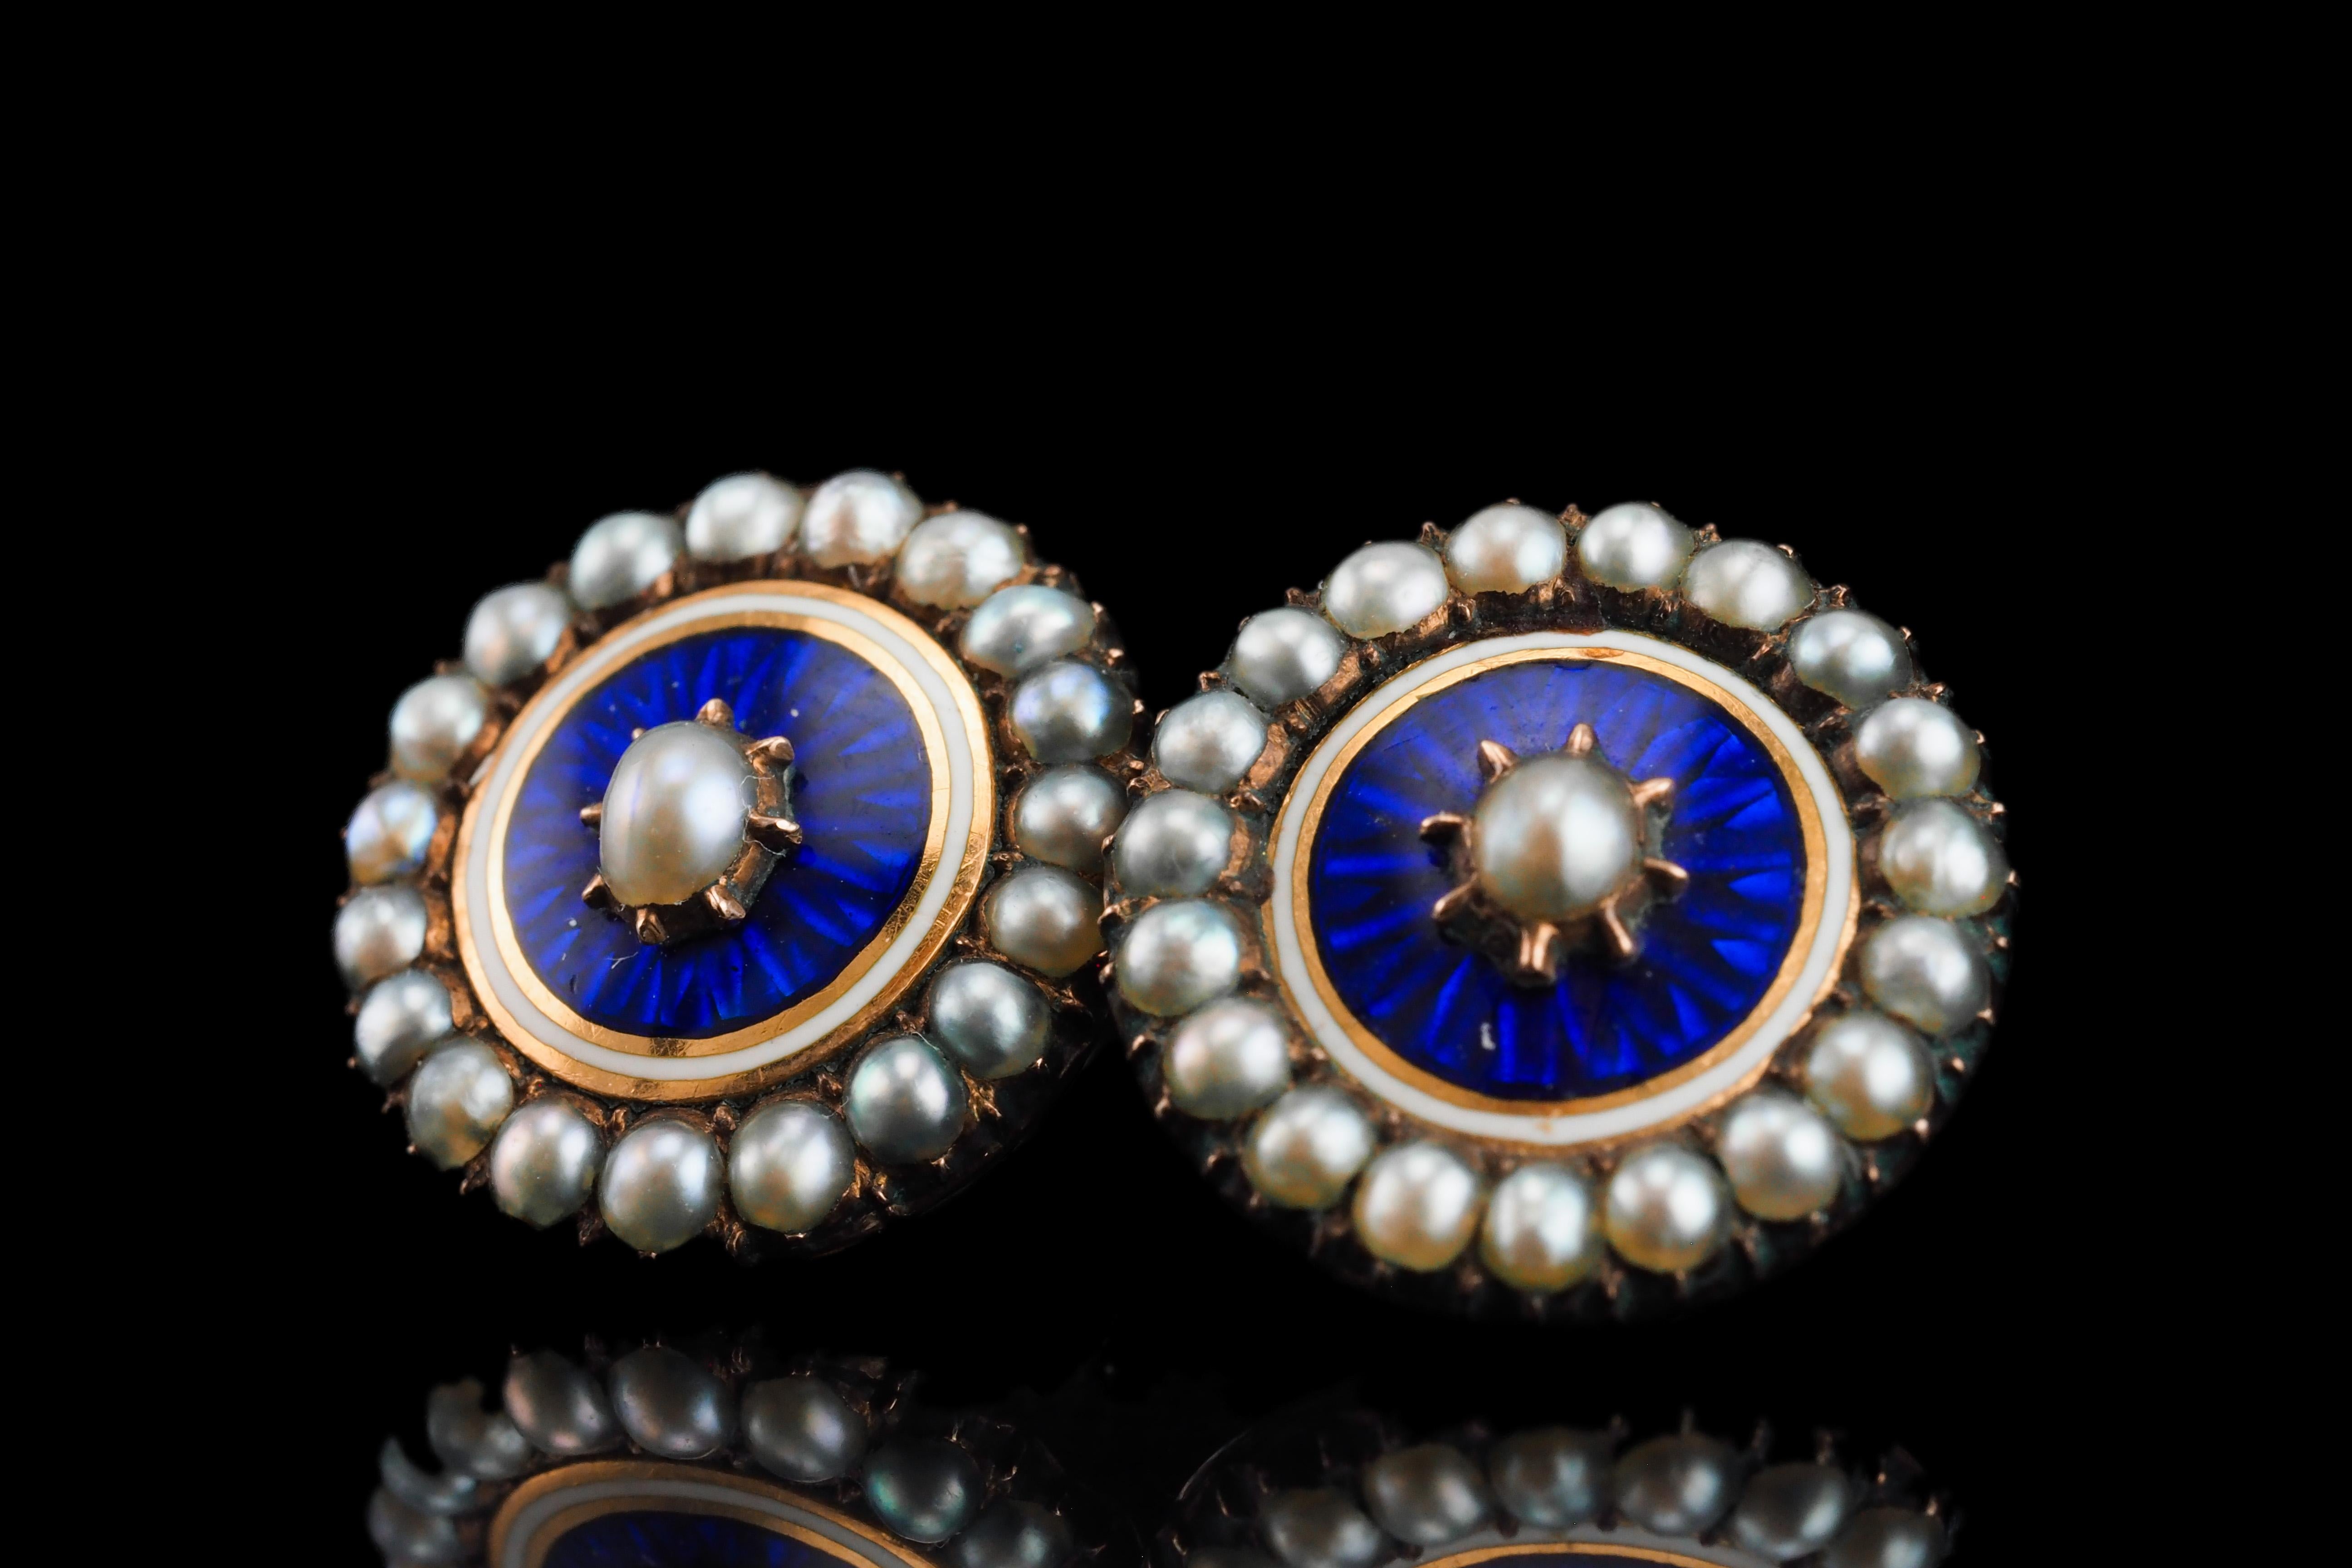 Women's or Men's Antique Georgian Gold Earrings with Blue Enamel Guilloche Pearl Cluster c.1800 For Sale